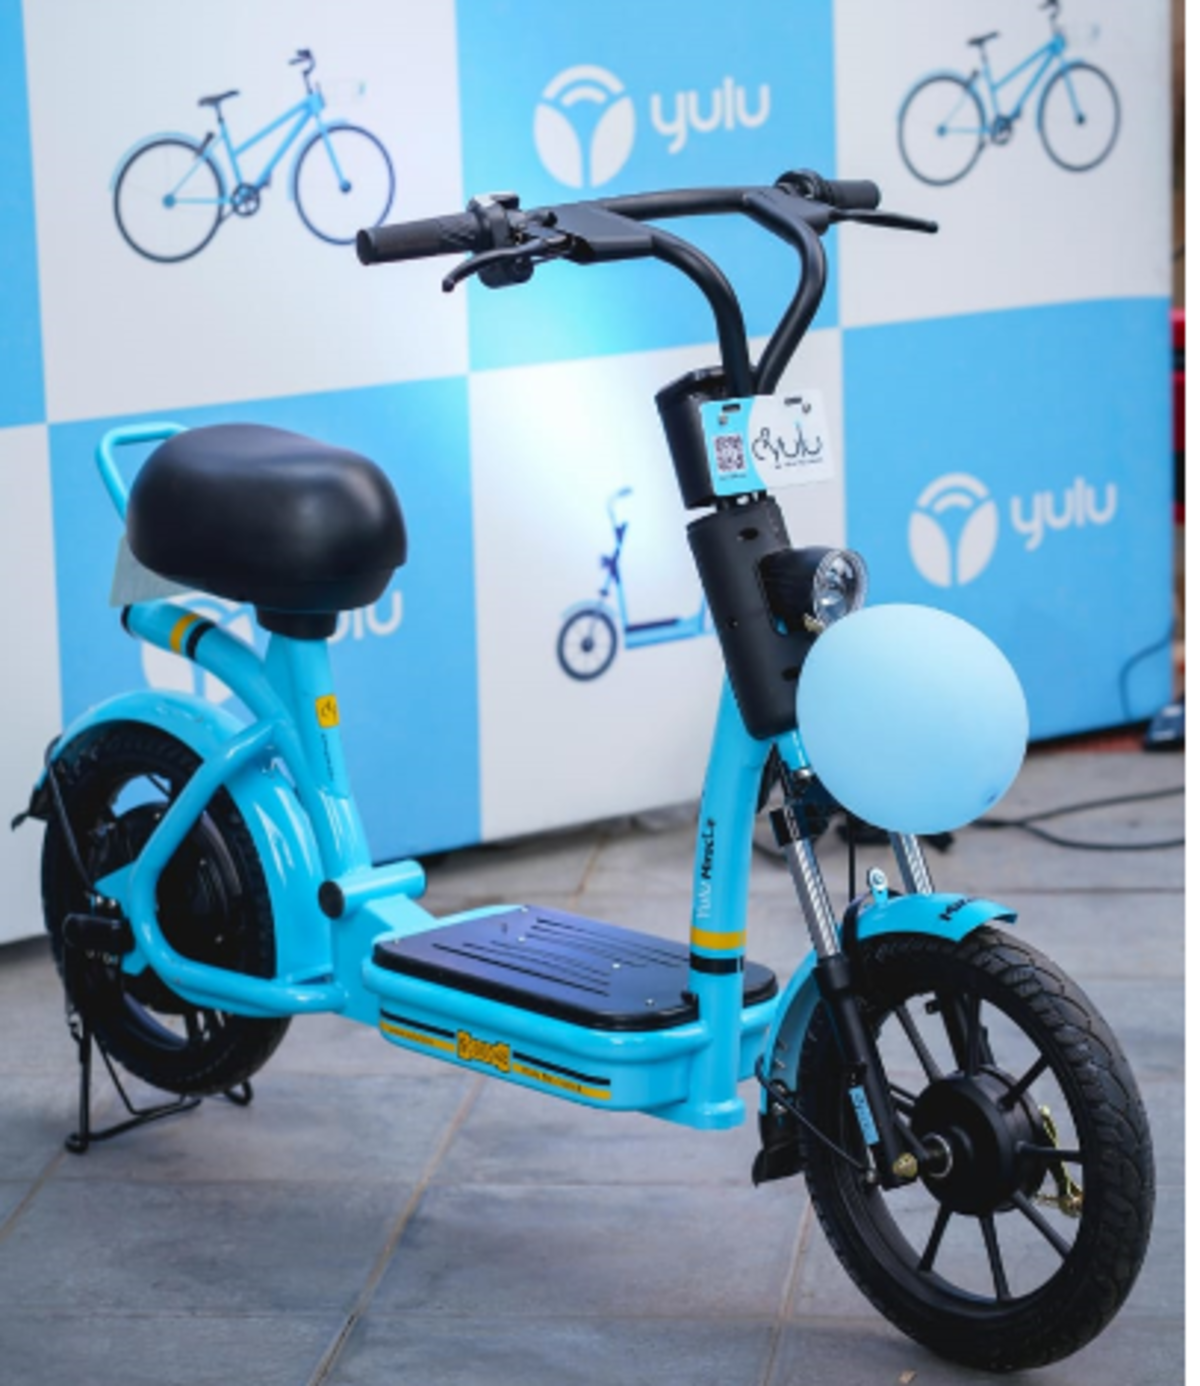 yulu miracle bike app